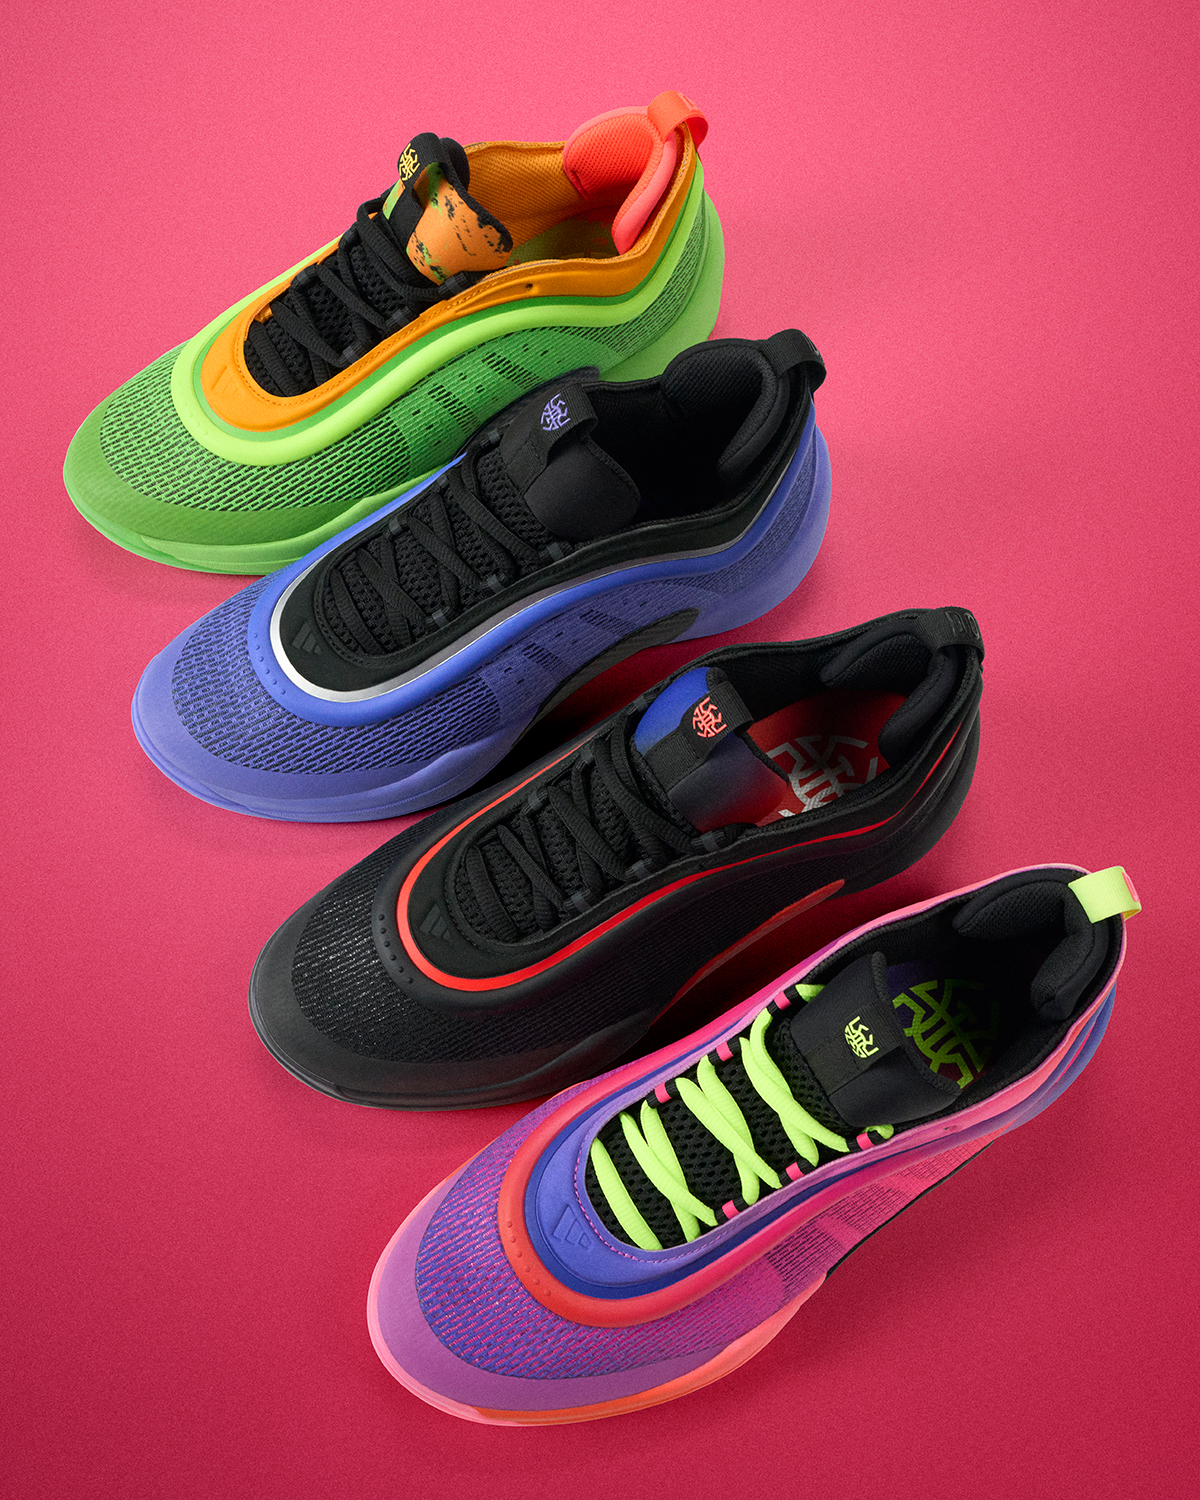 Adidas Don Issue 6 Colorways Revealed 1